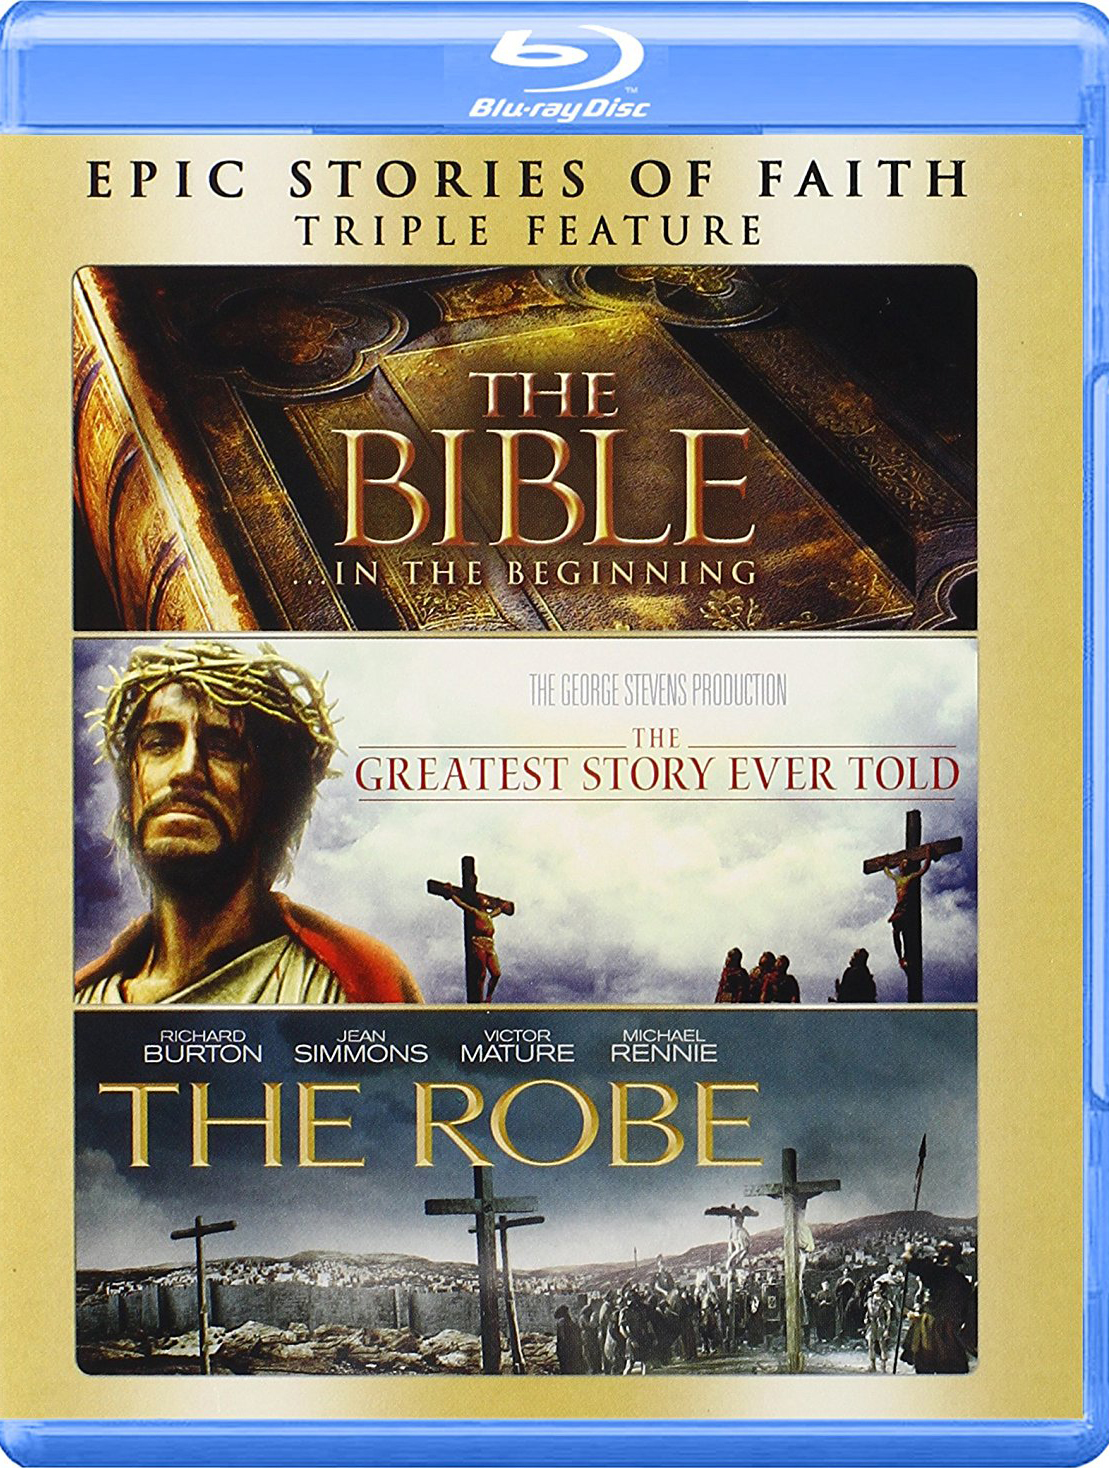 Epic Stories of Faith